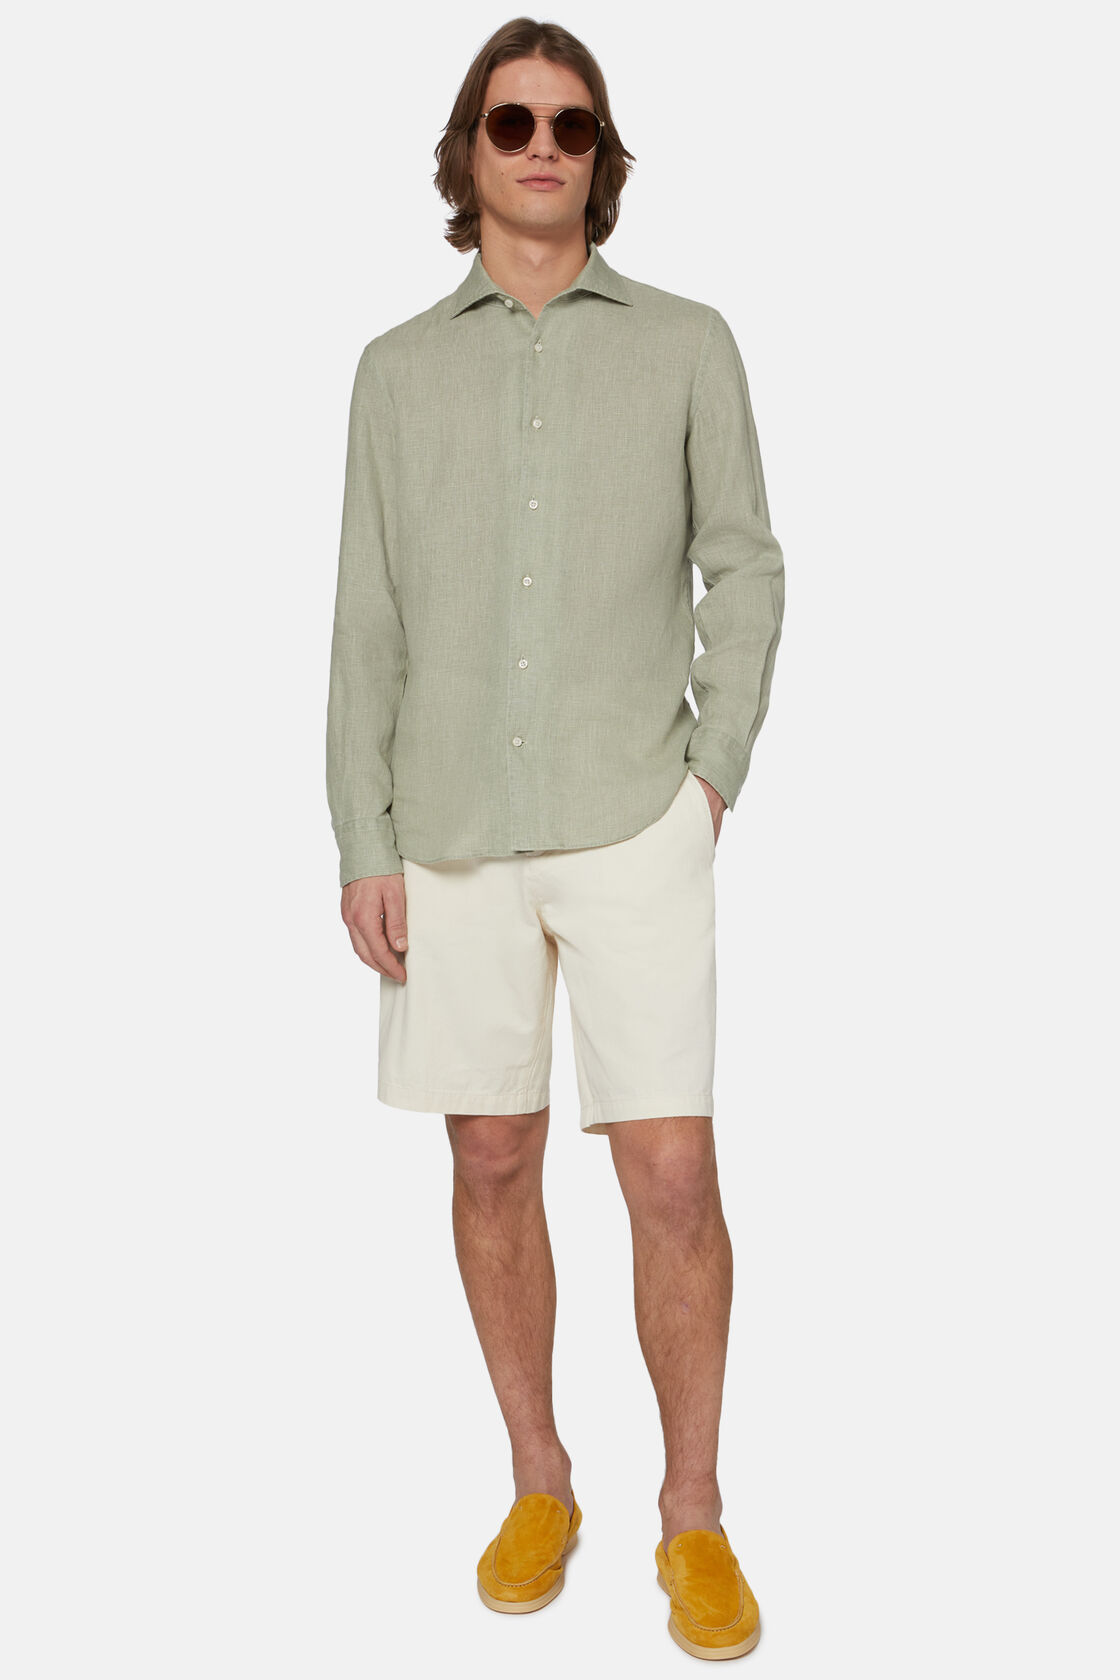 Bermuda Shorts In Hemp Cotton, Cream, hi-res